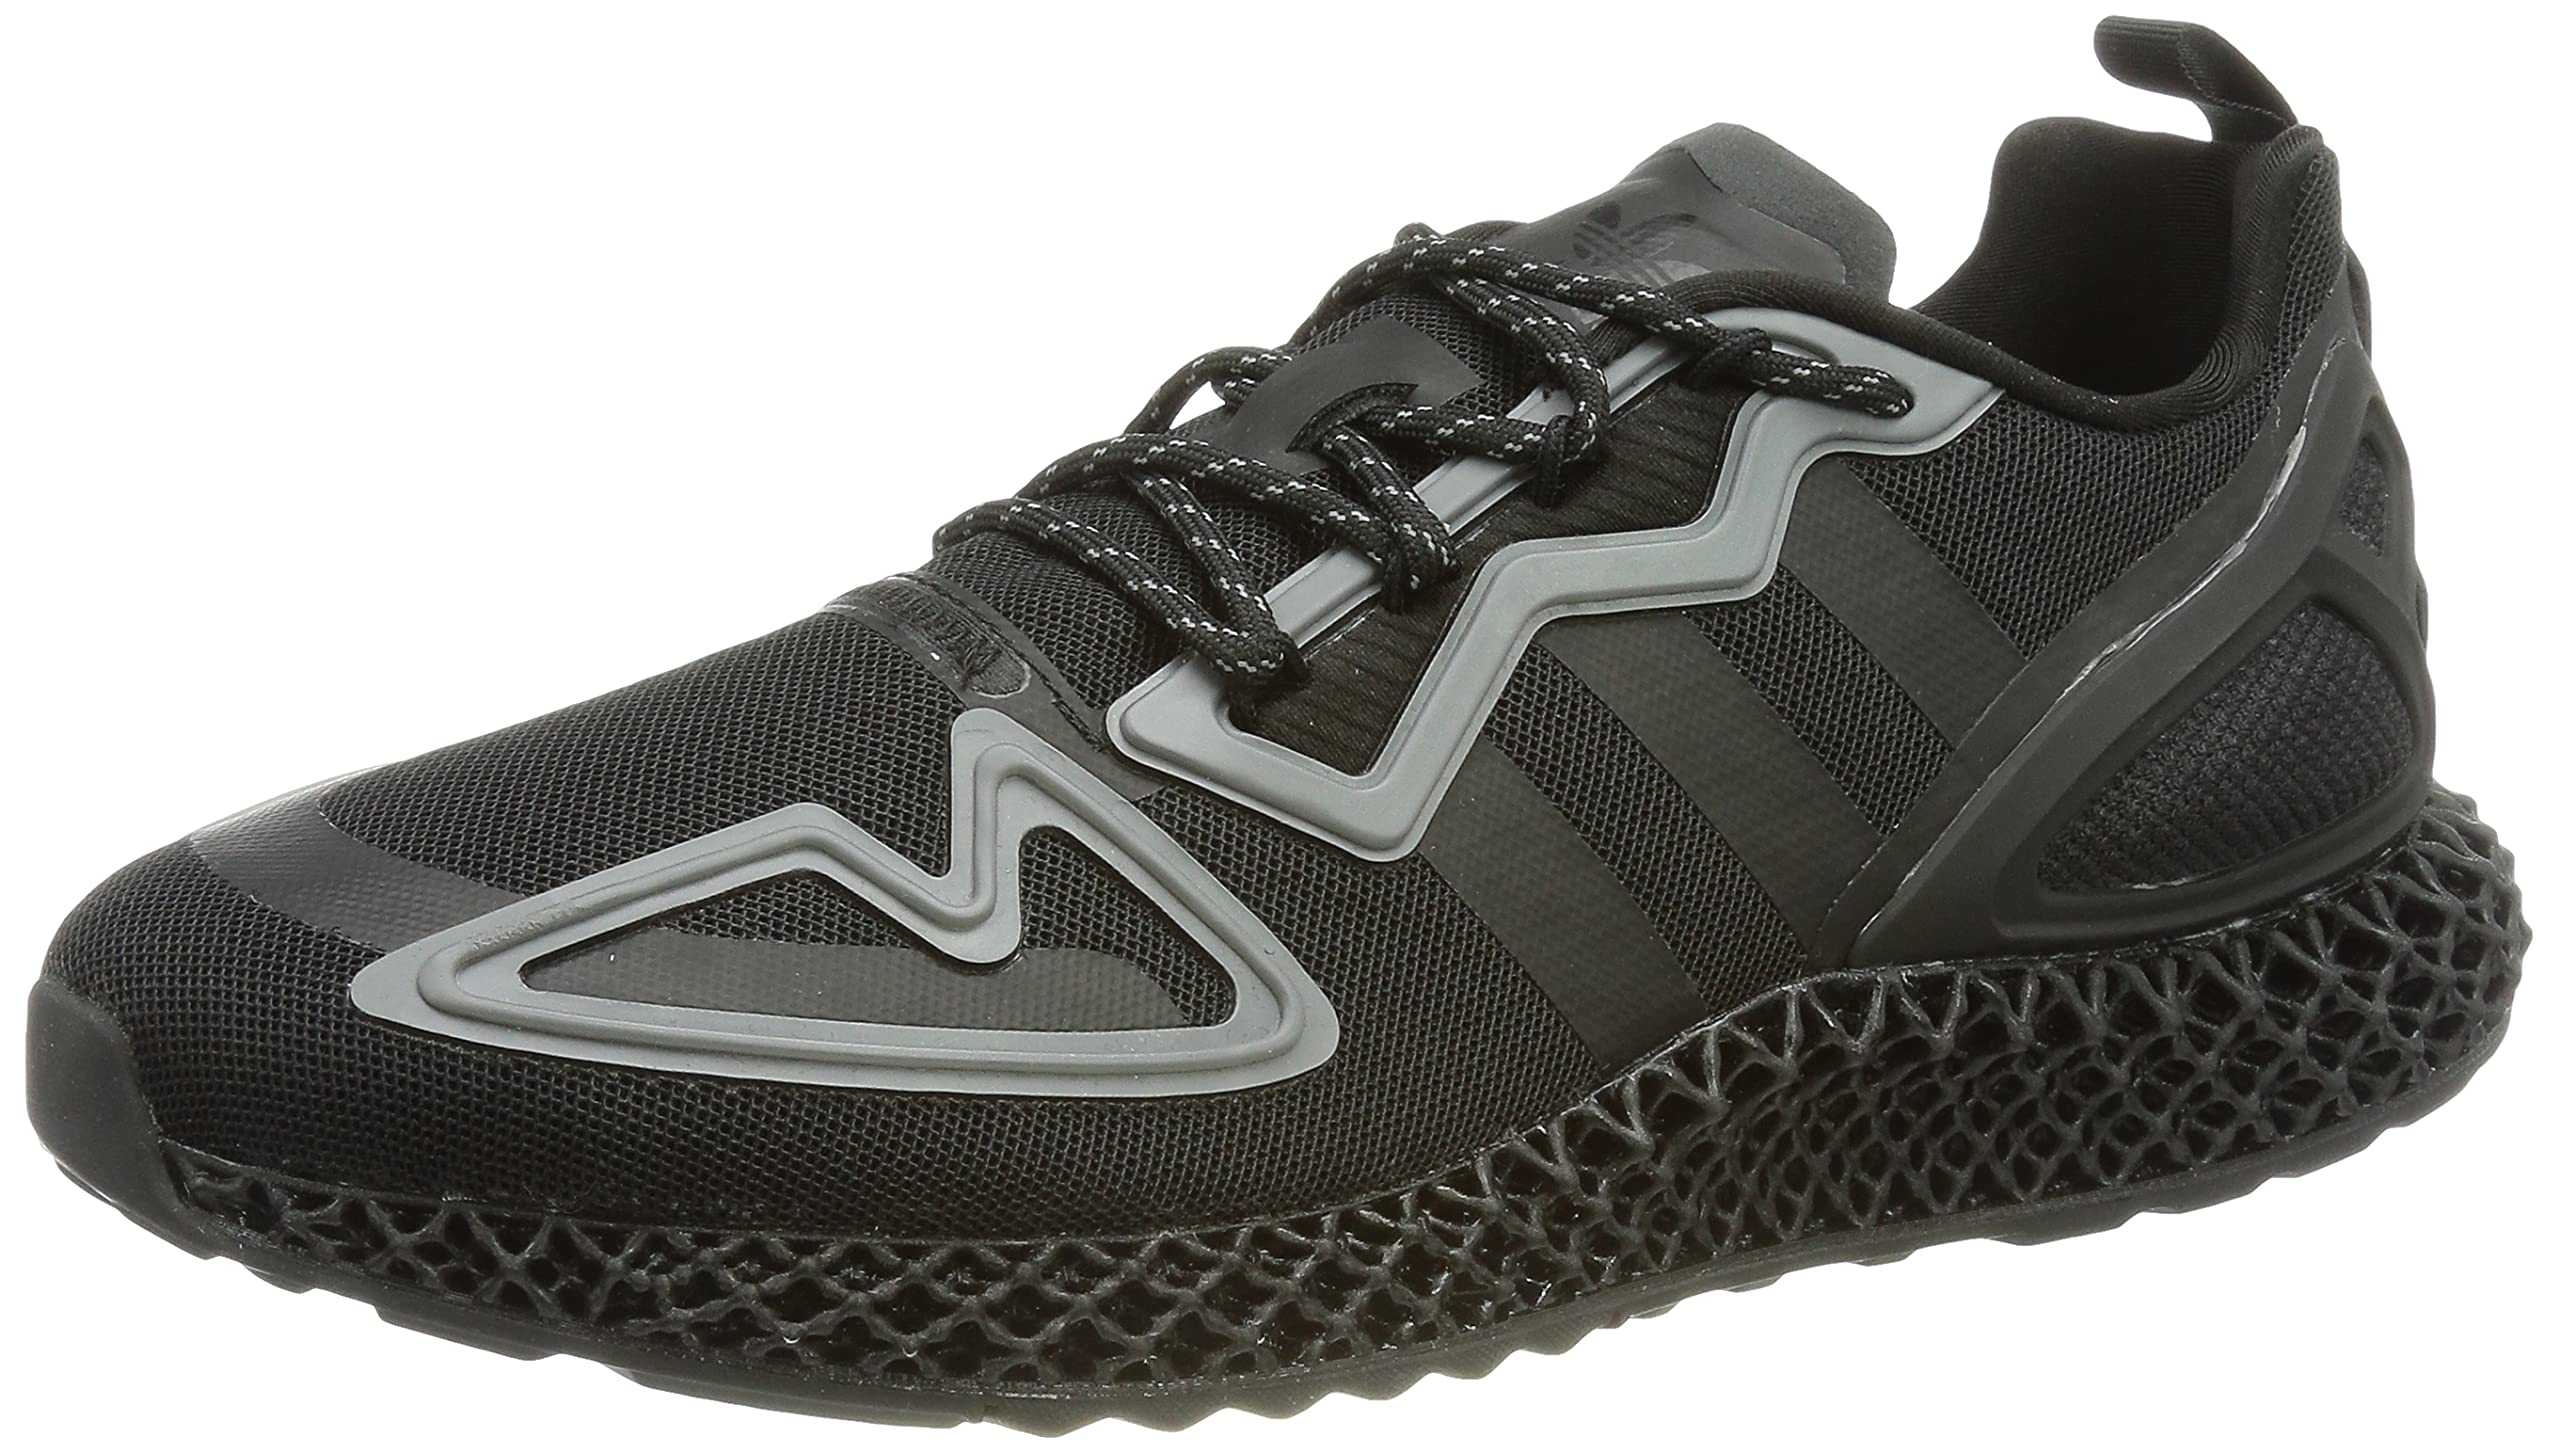 adidas Originals Herren FZ3561_43 1/3 Sneakers, Black, 43 1/3 EU